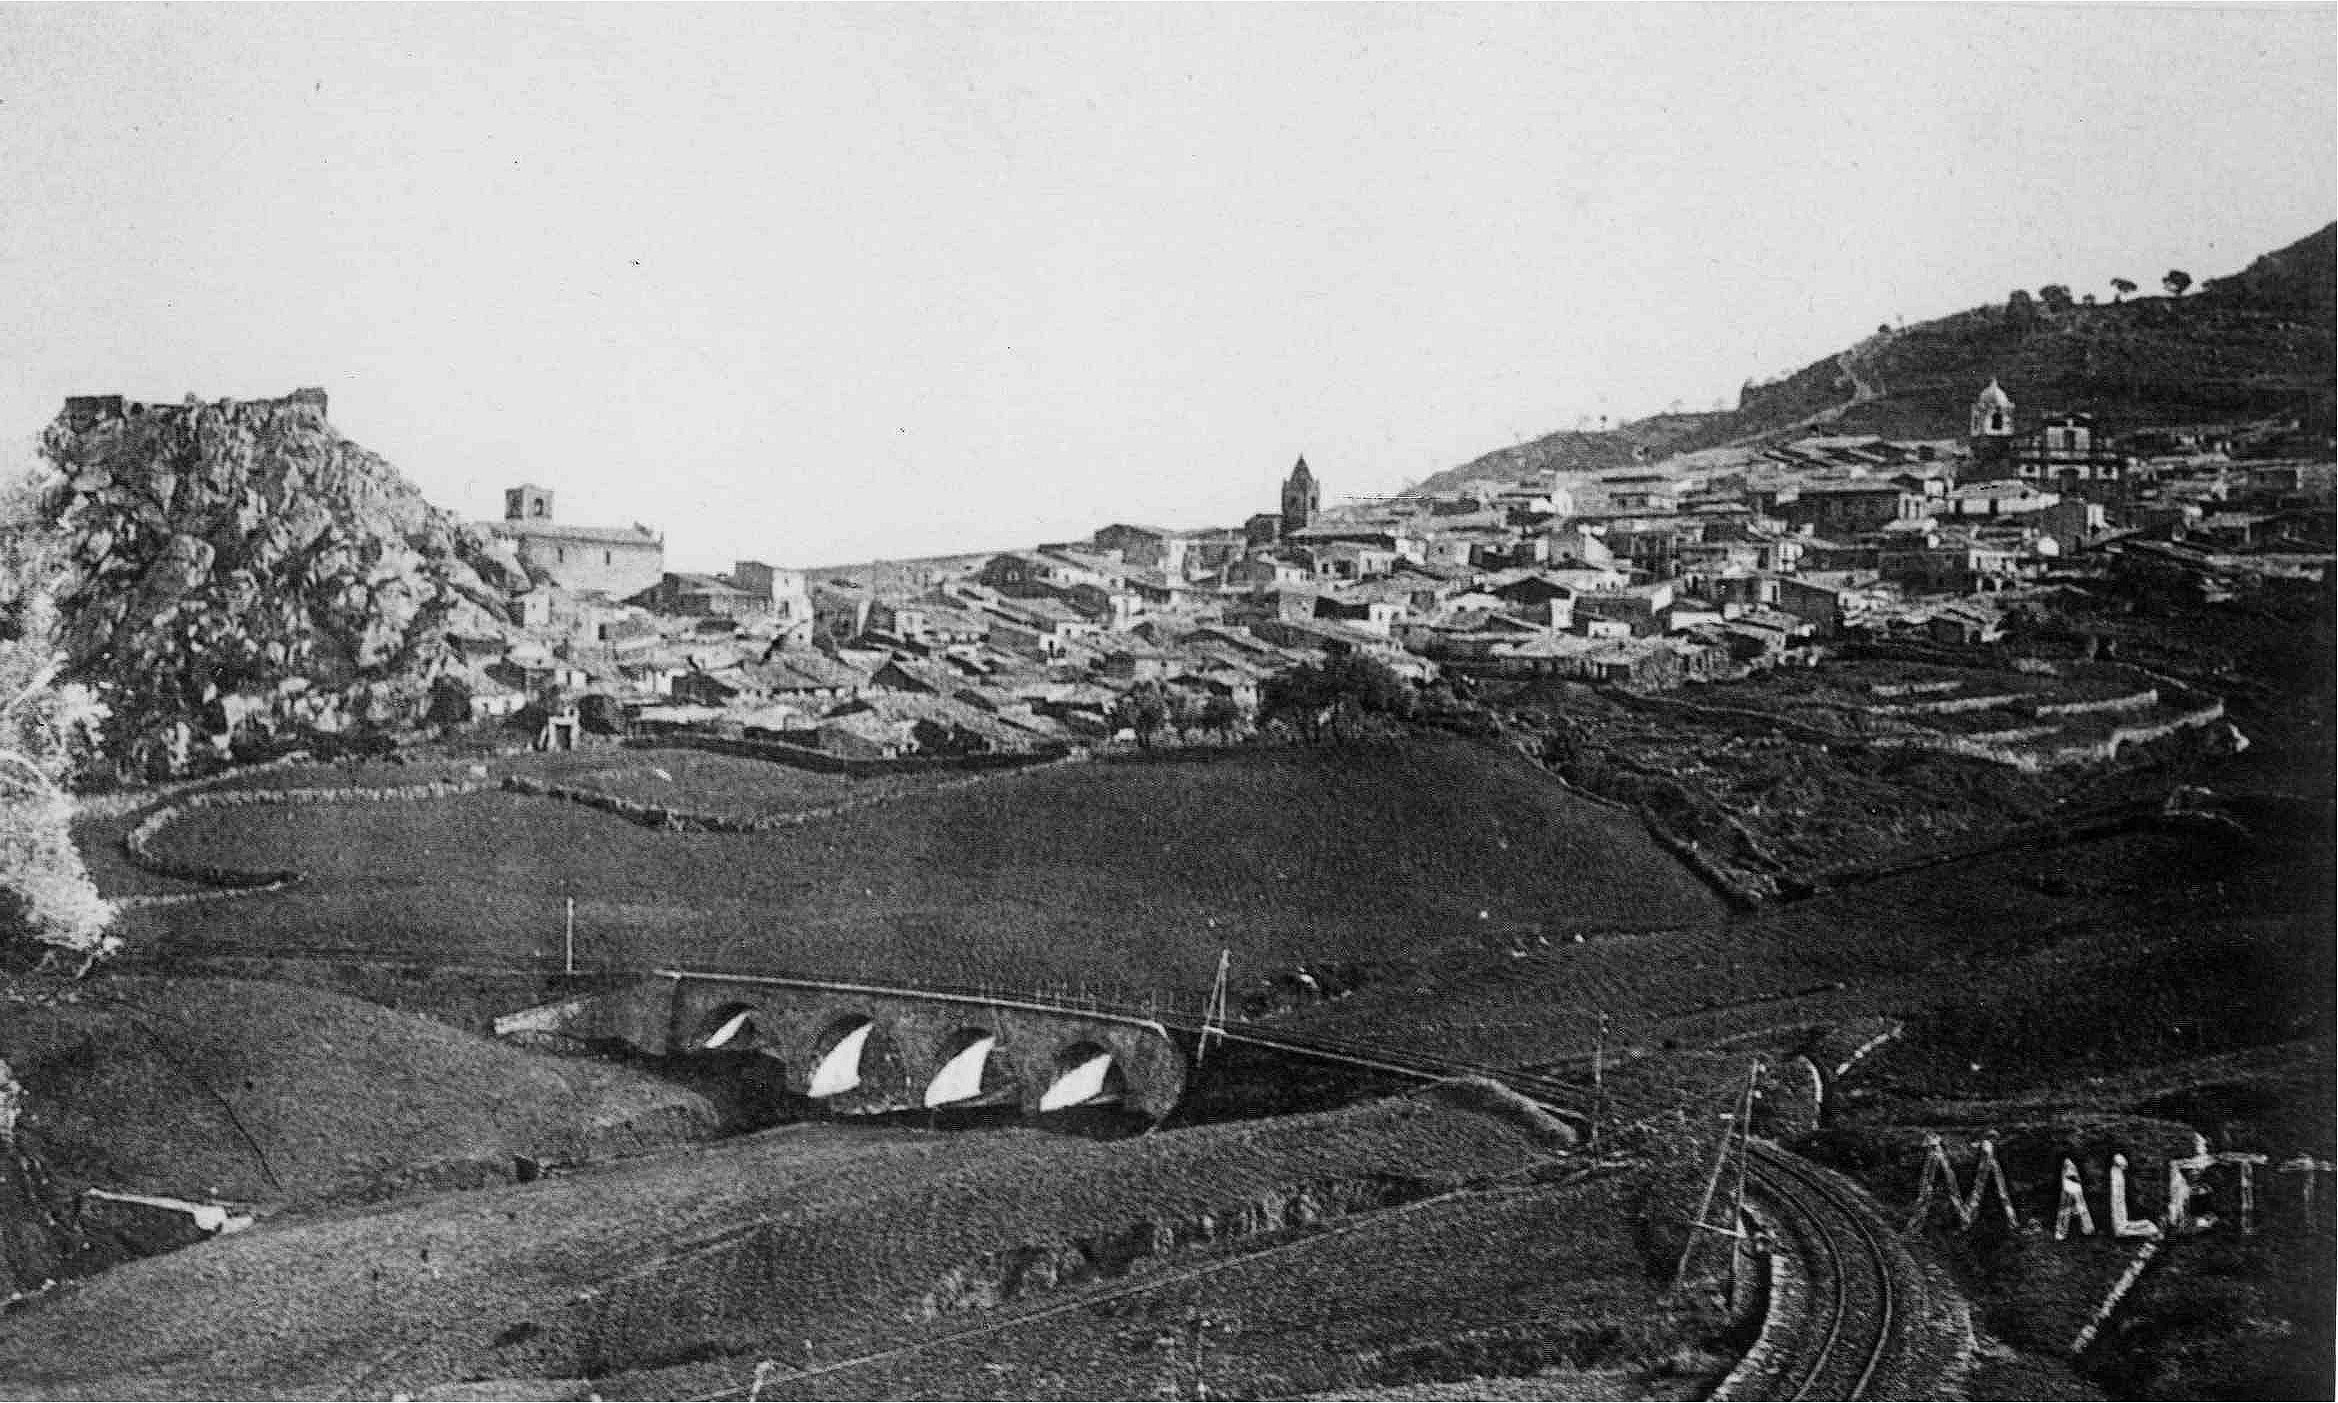 Maletto. Panorama 1900